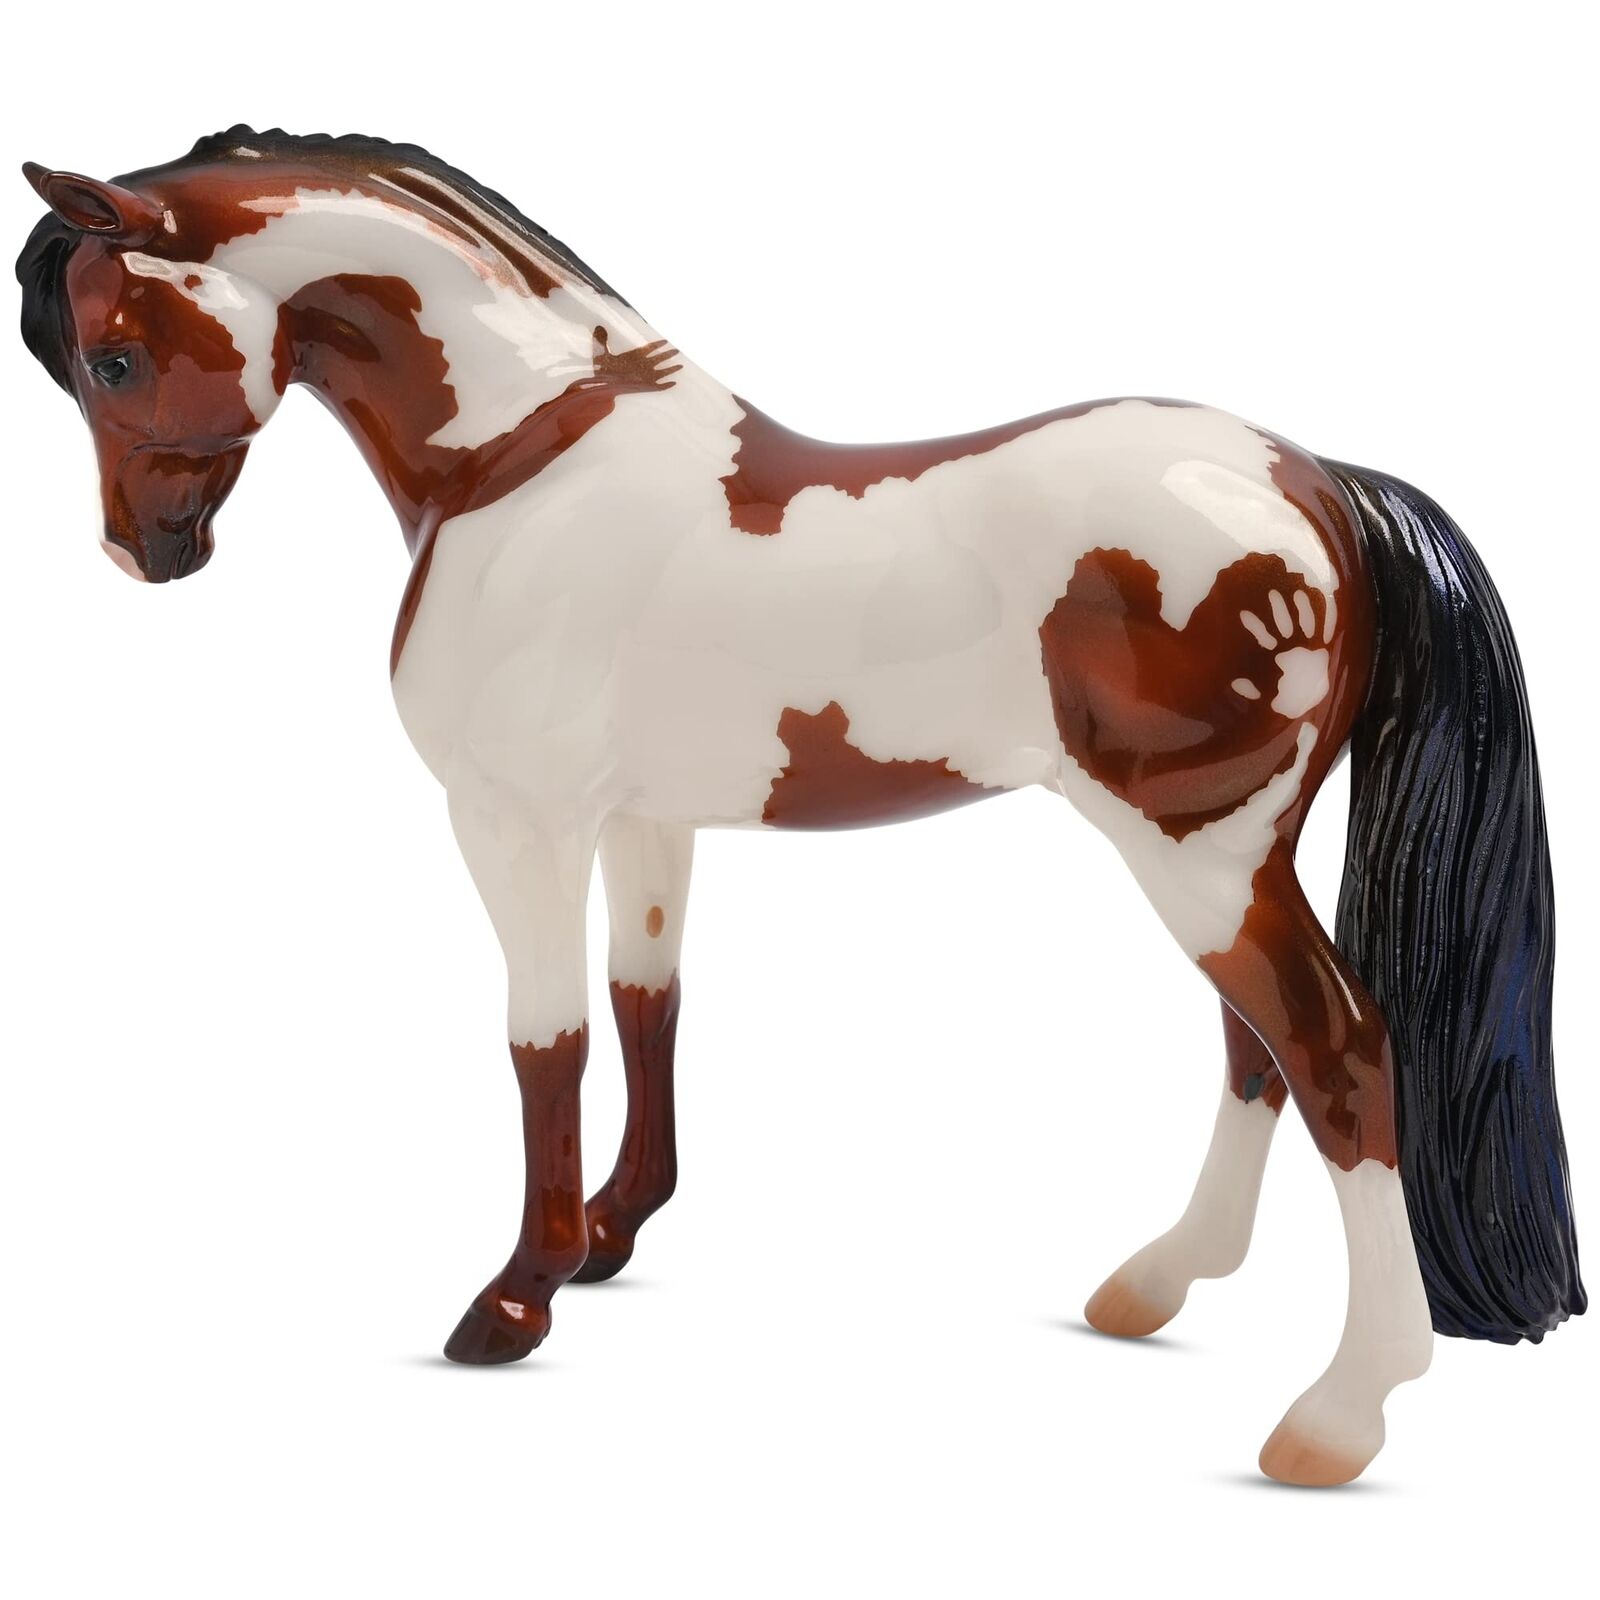 Breyer Horses Horse of The Year | Hope | Model #62123 Brown & White